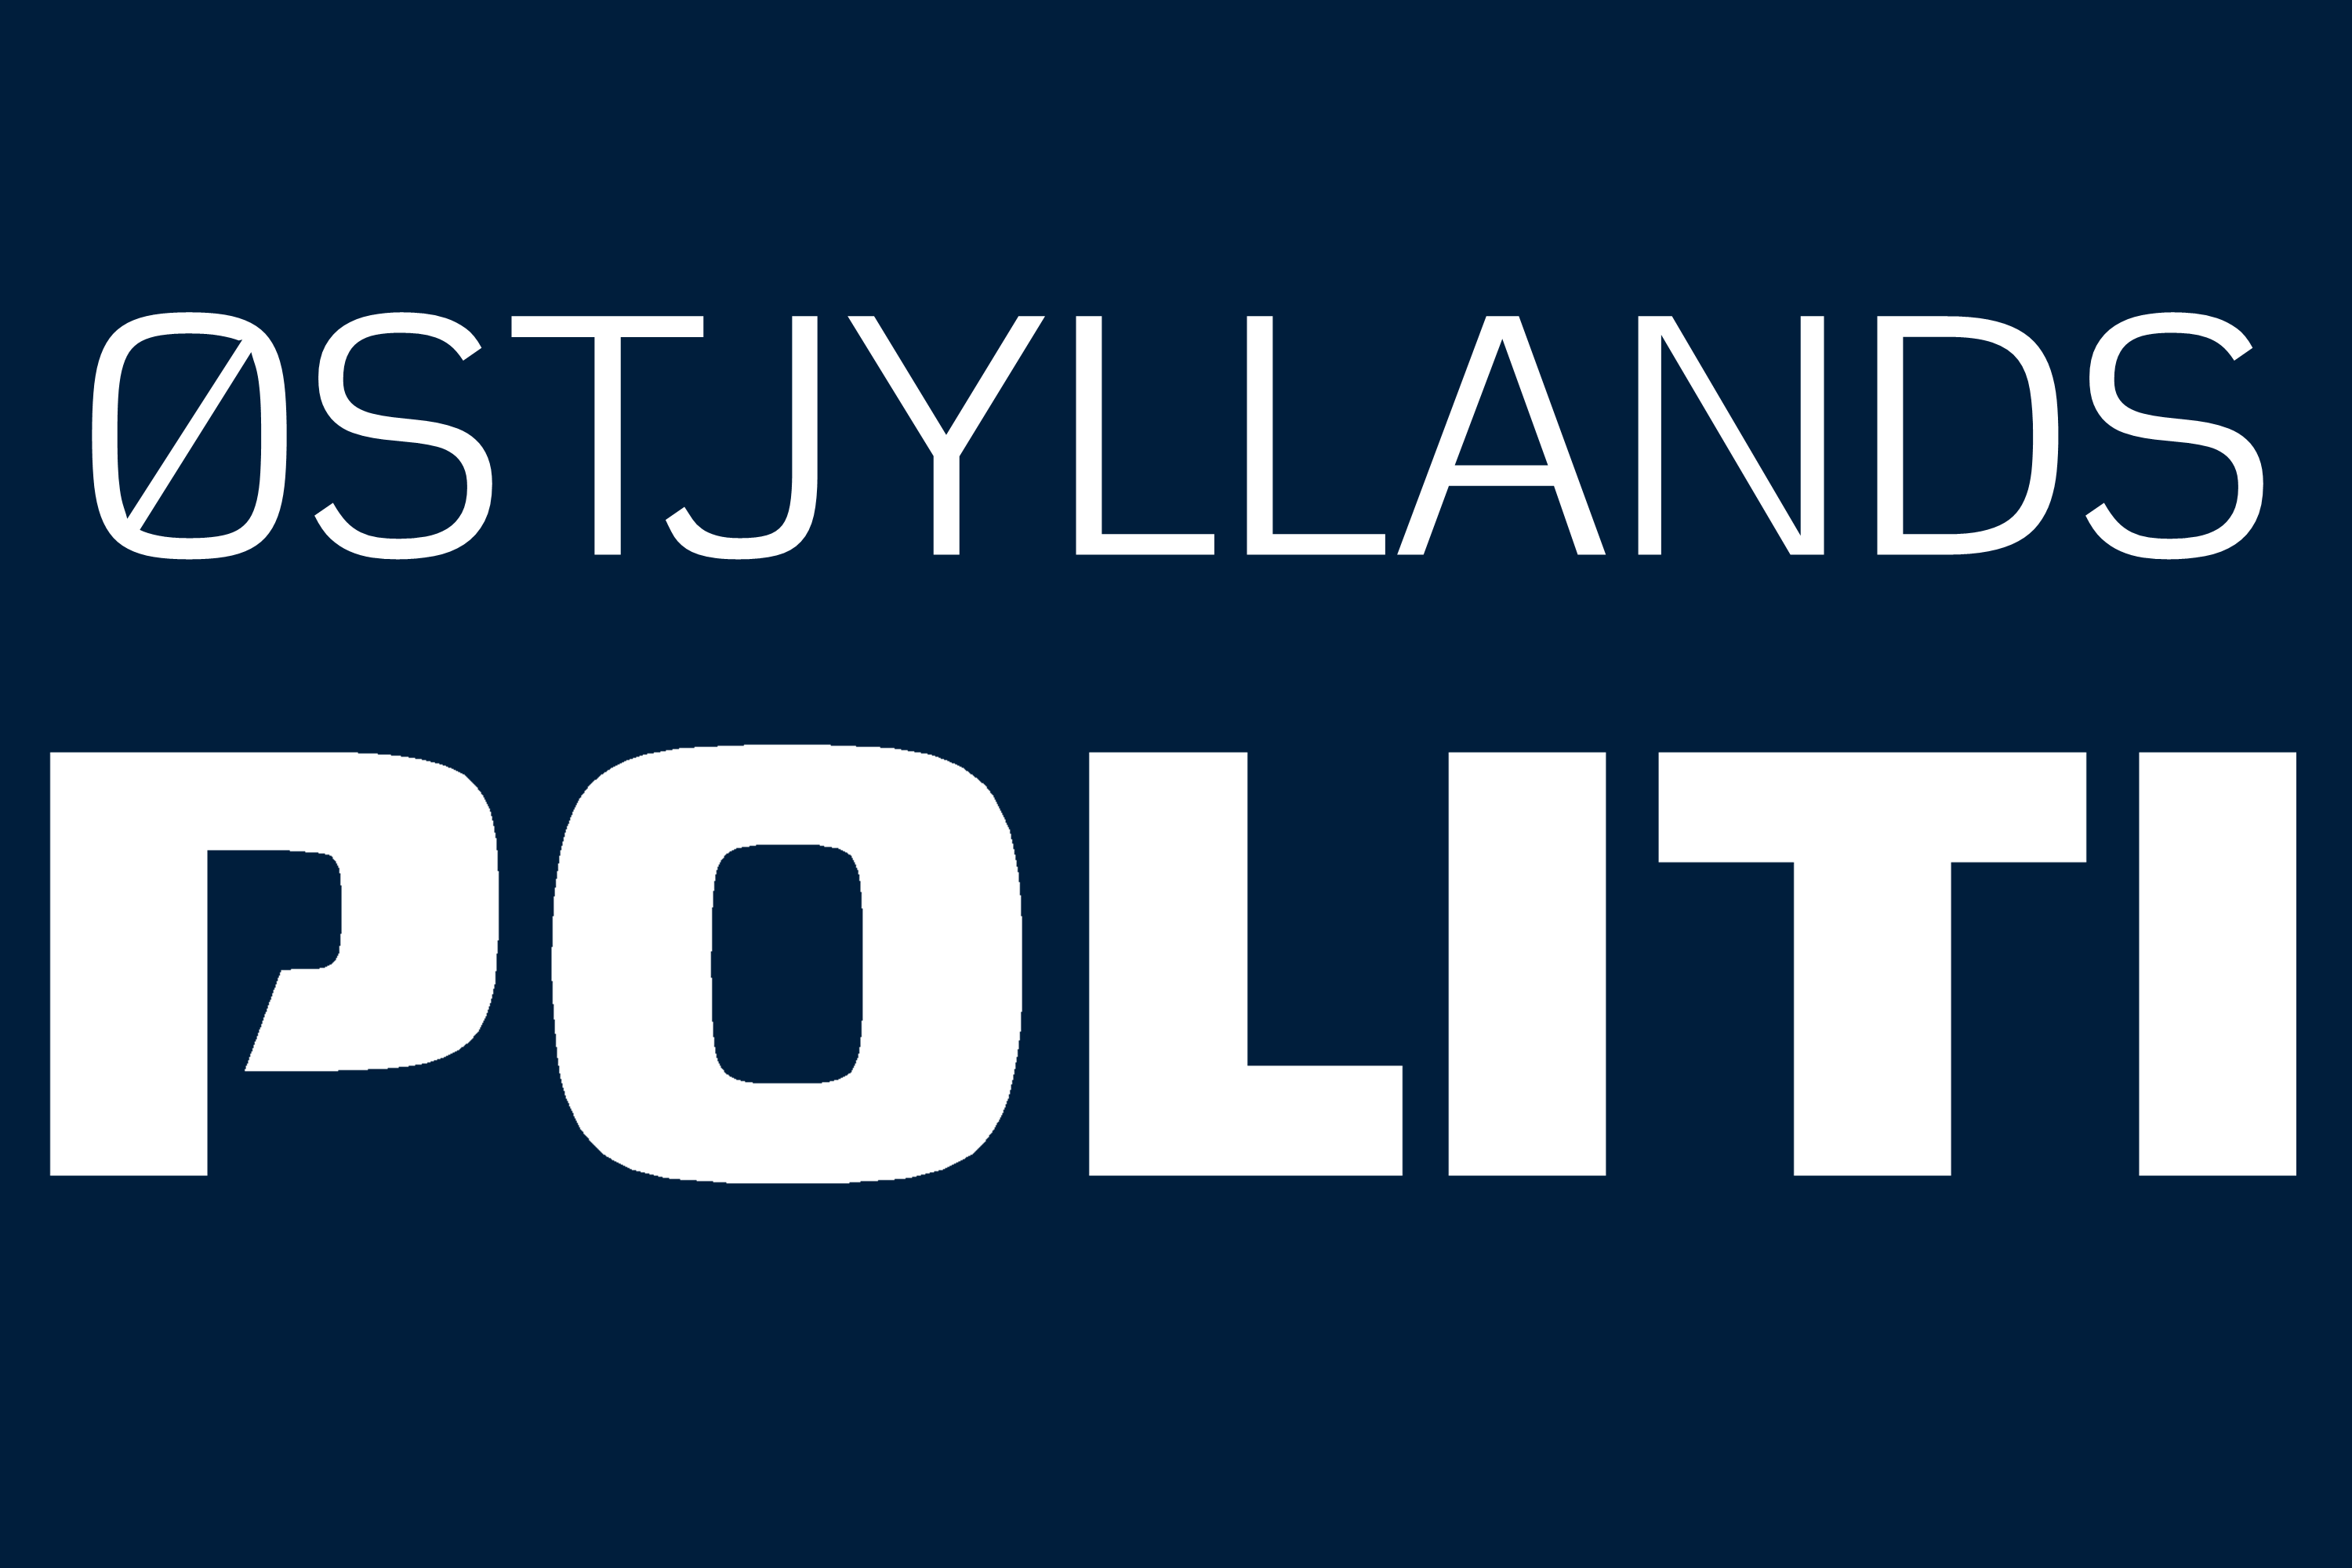 Kredslogo for Østjyllands Politi